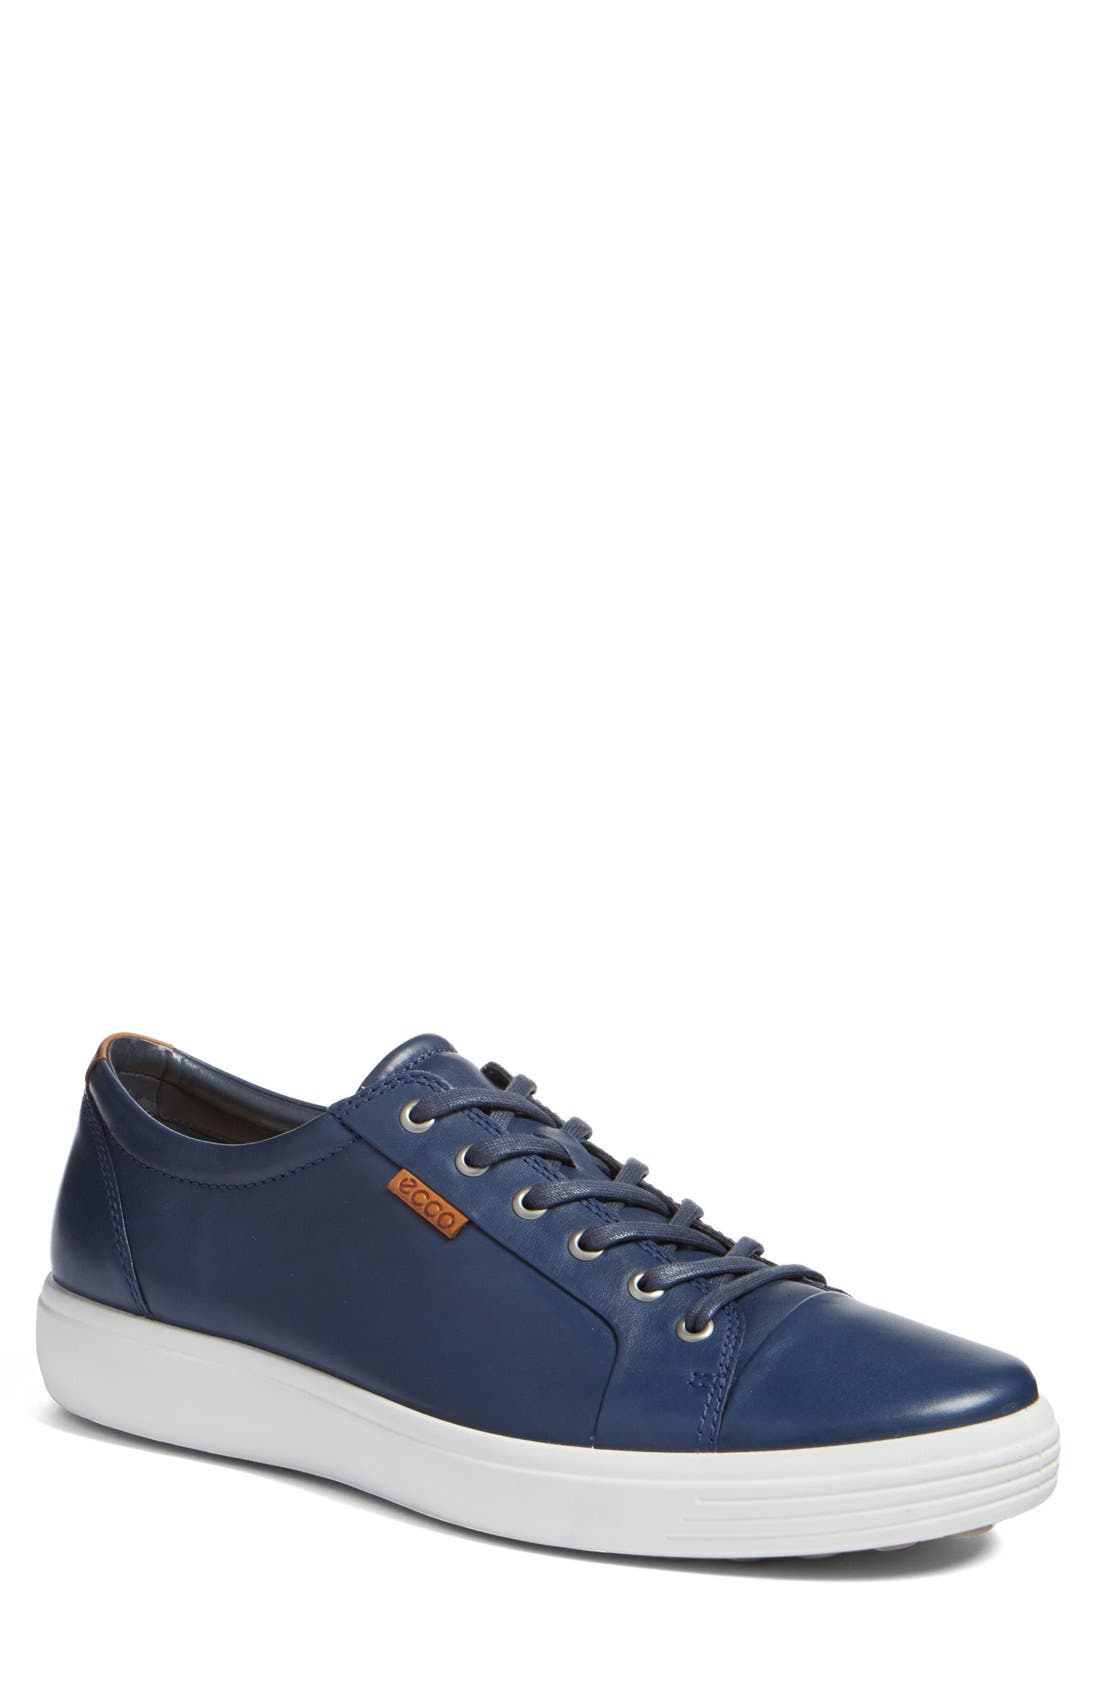 UPC 809702103923 product image for Men's Ecco Soft Vii Lace-Up Sneaker, Size 12-12.5US / 46EU - Blue | upcitemdb.com